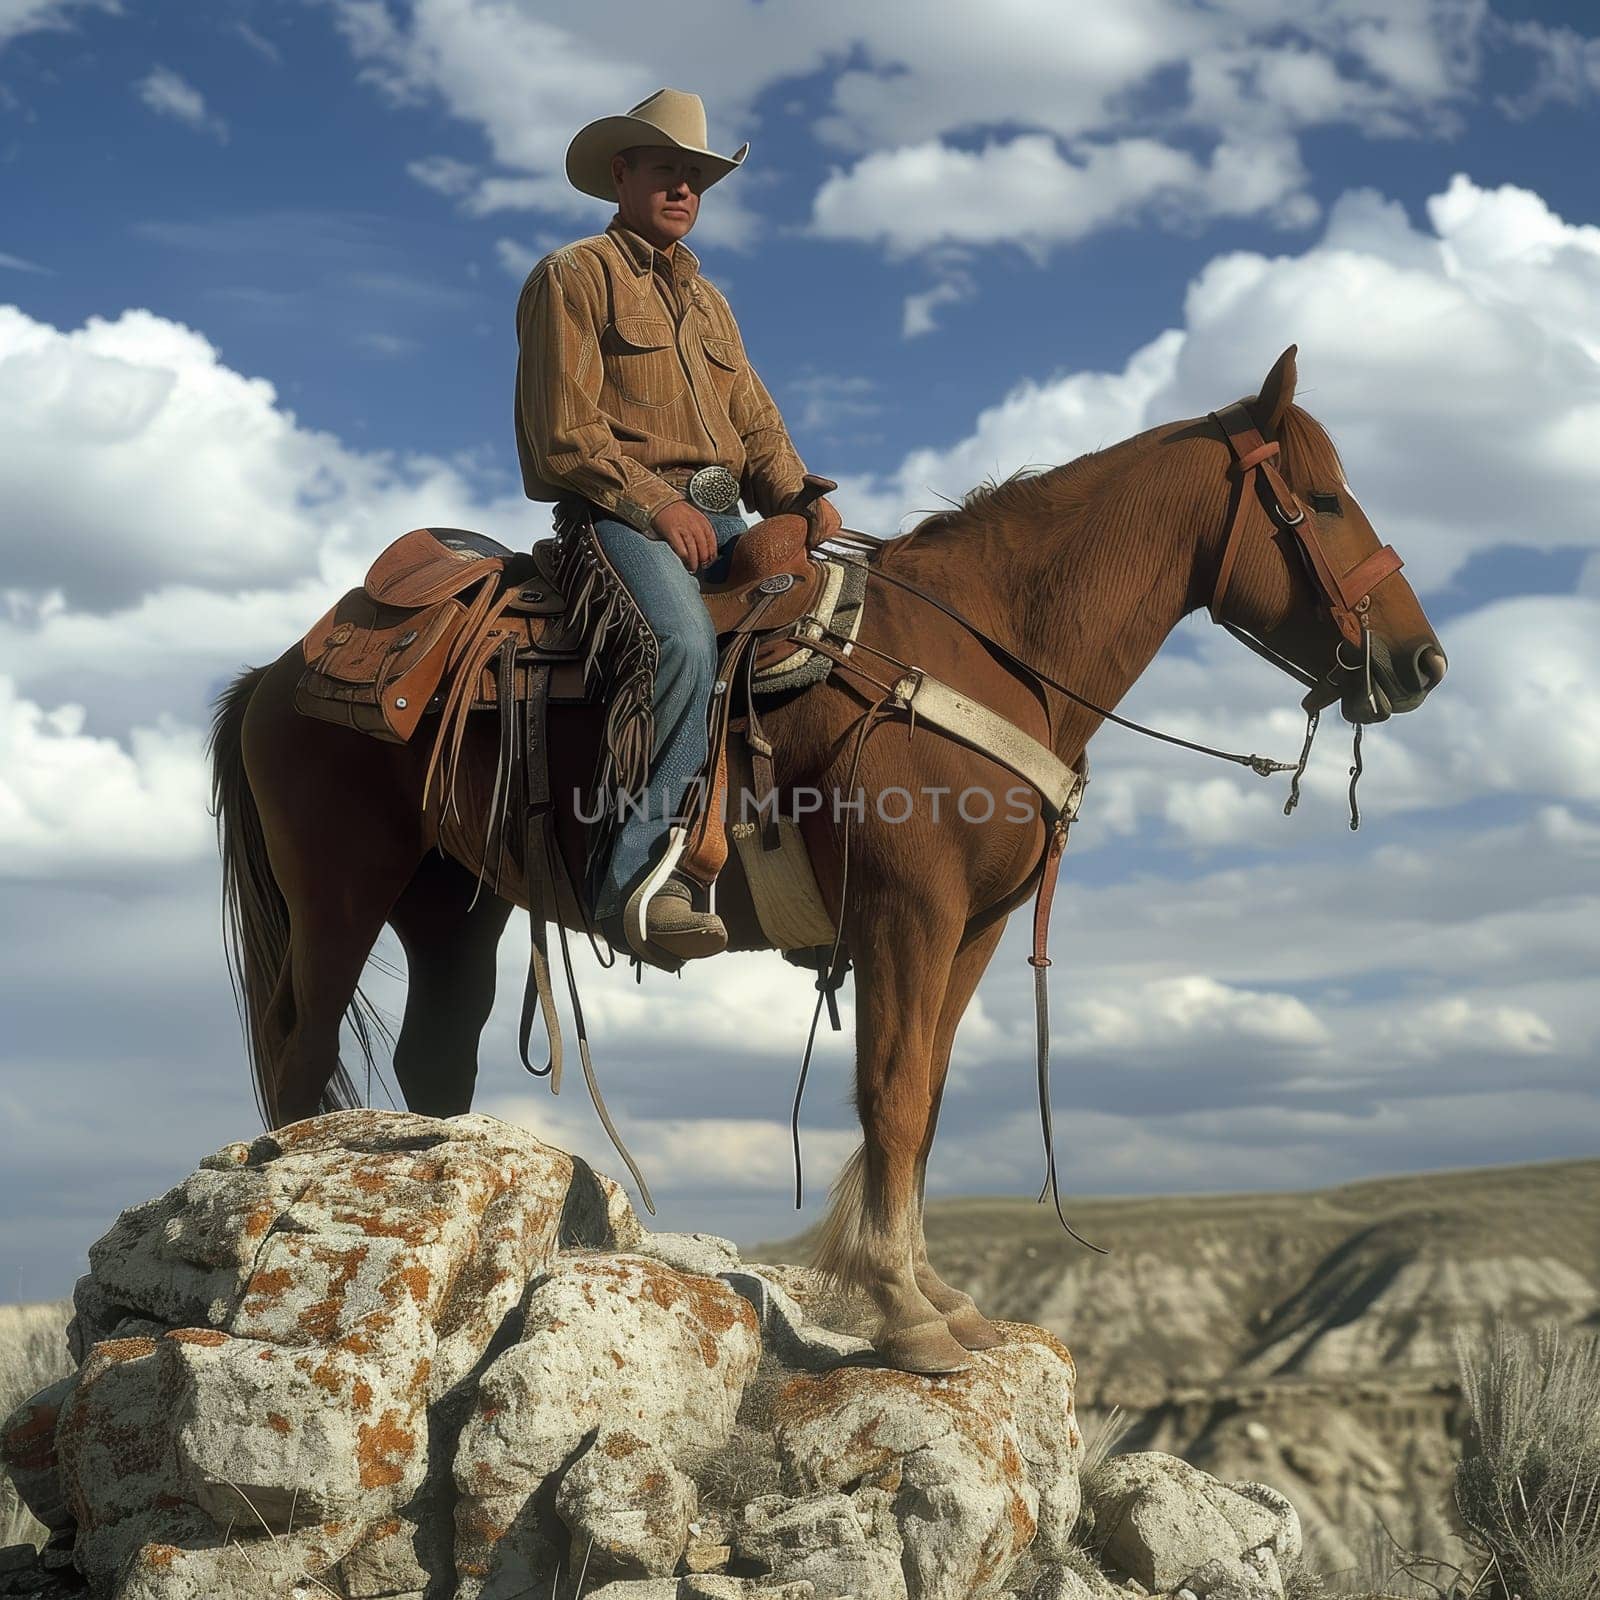 Confident cowboy sits astride a horse on a rocky outcrop under a vast sky